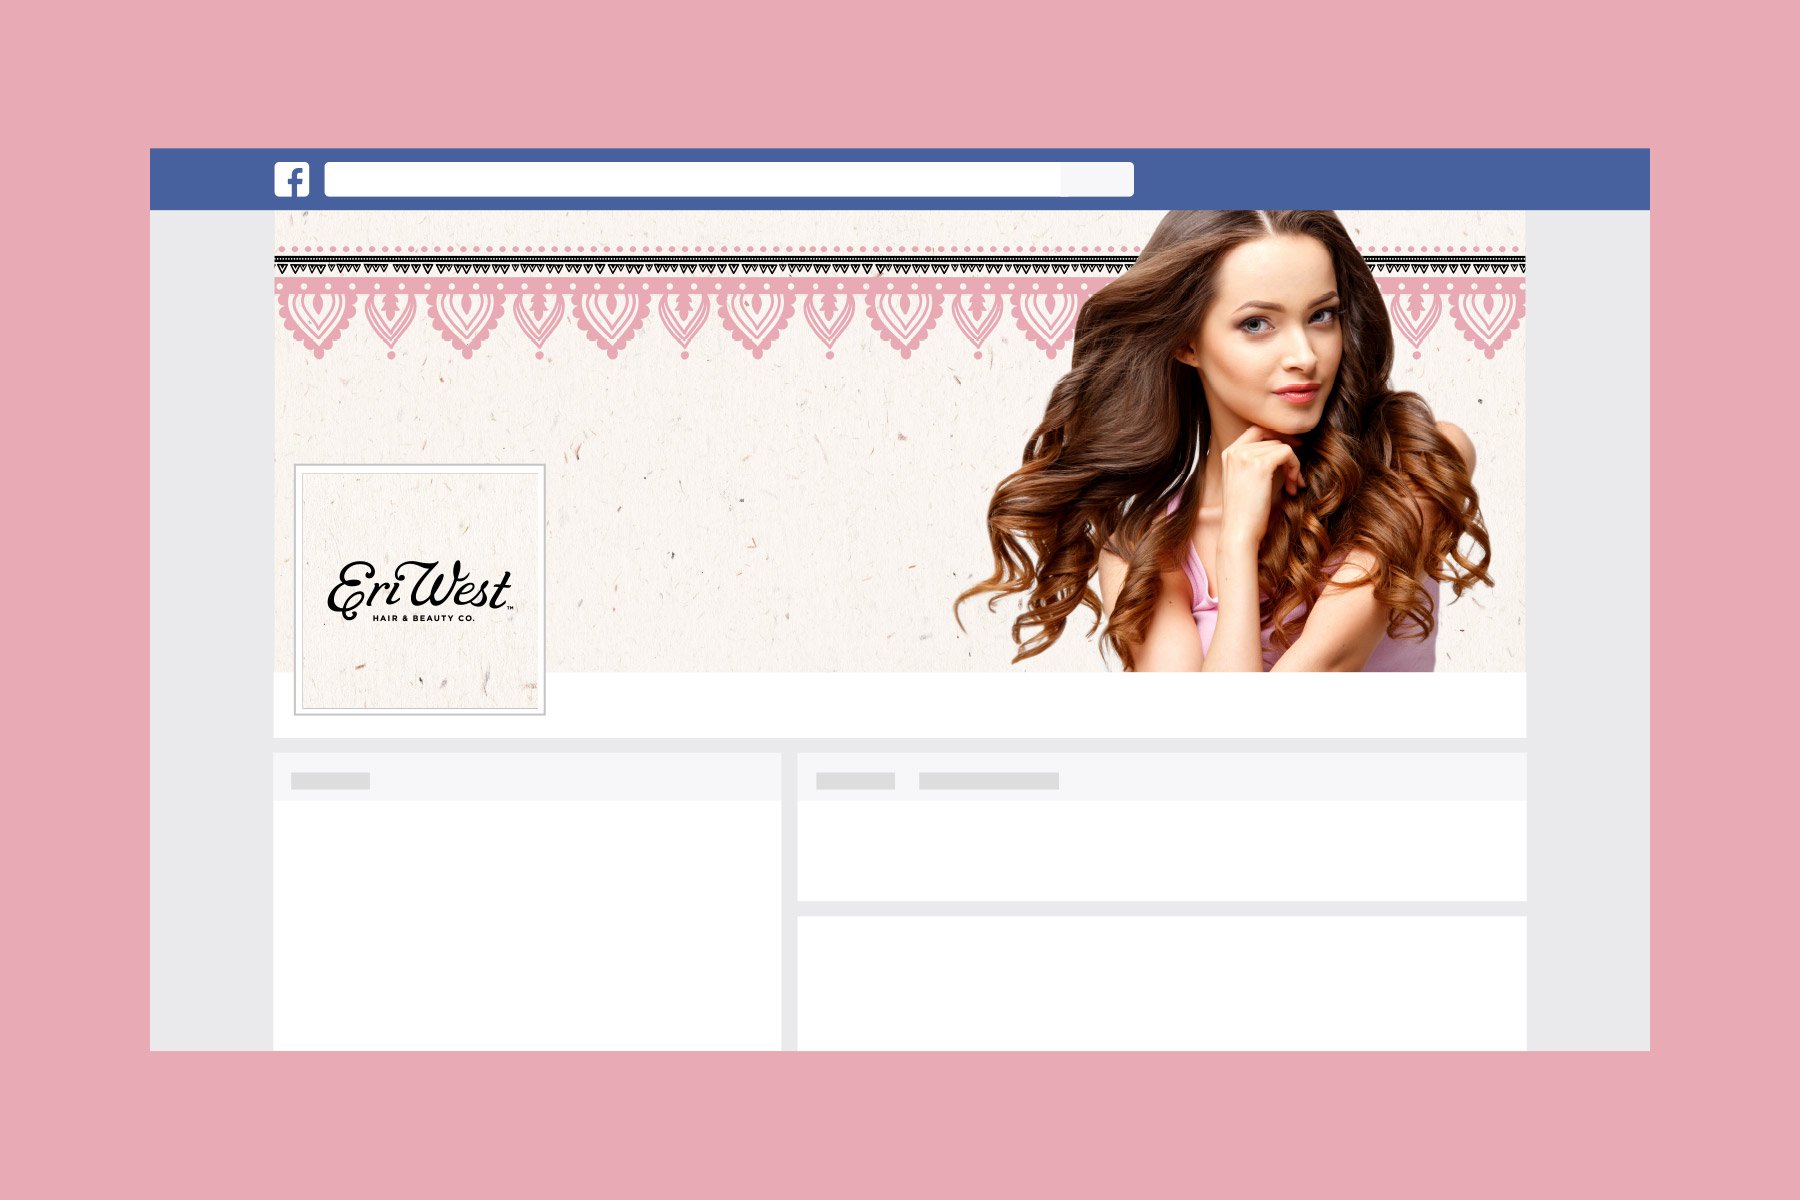 Facebook profile design for hair beauty brand